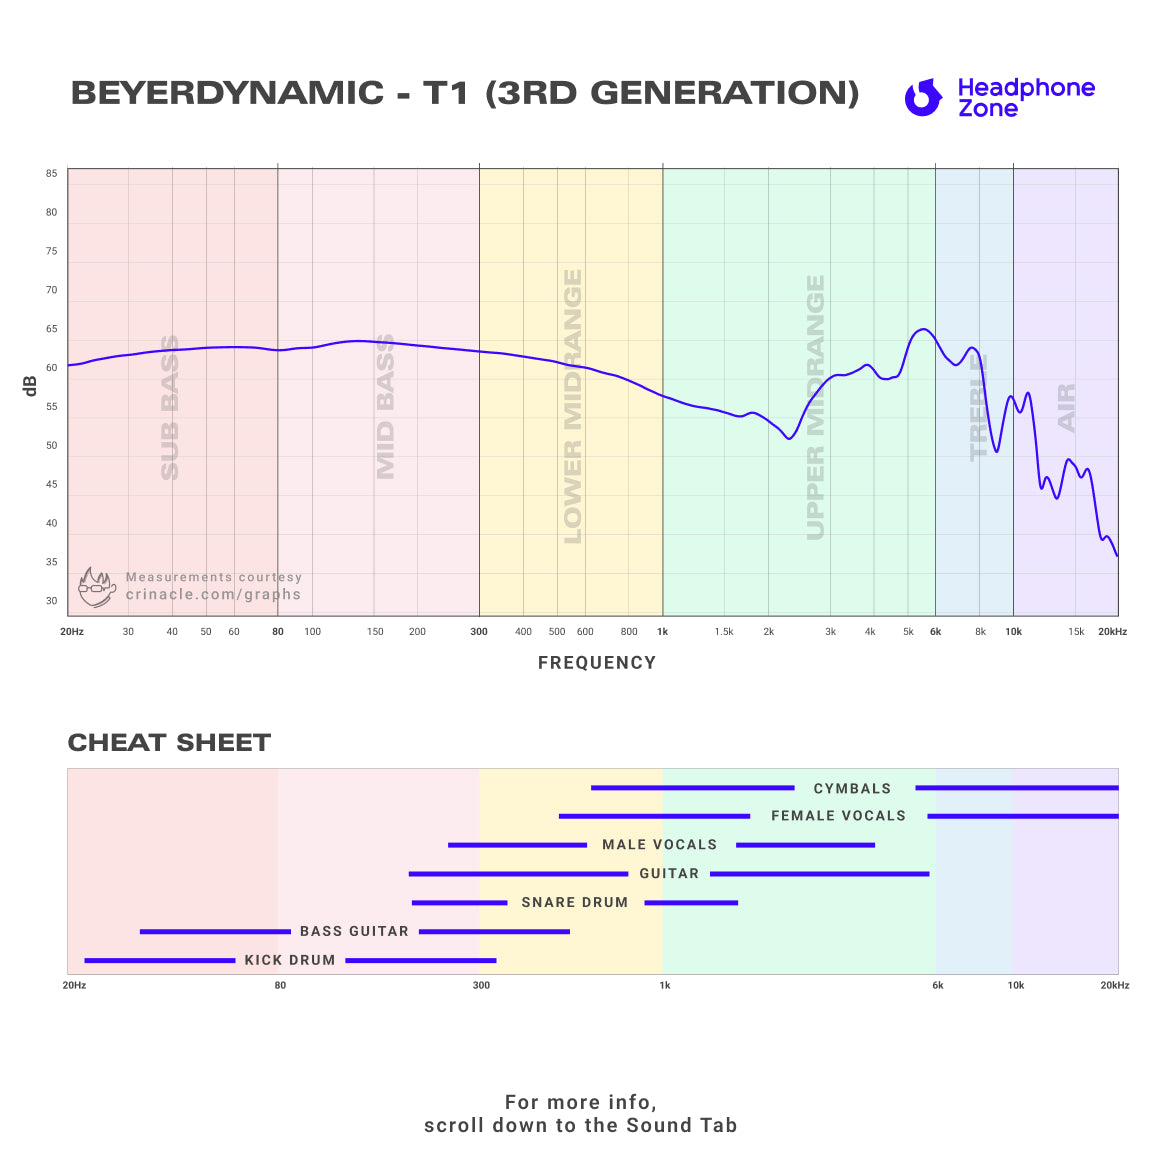 Beyerdynamic - T1 (3rd Generation)